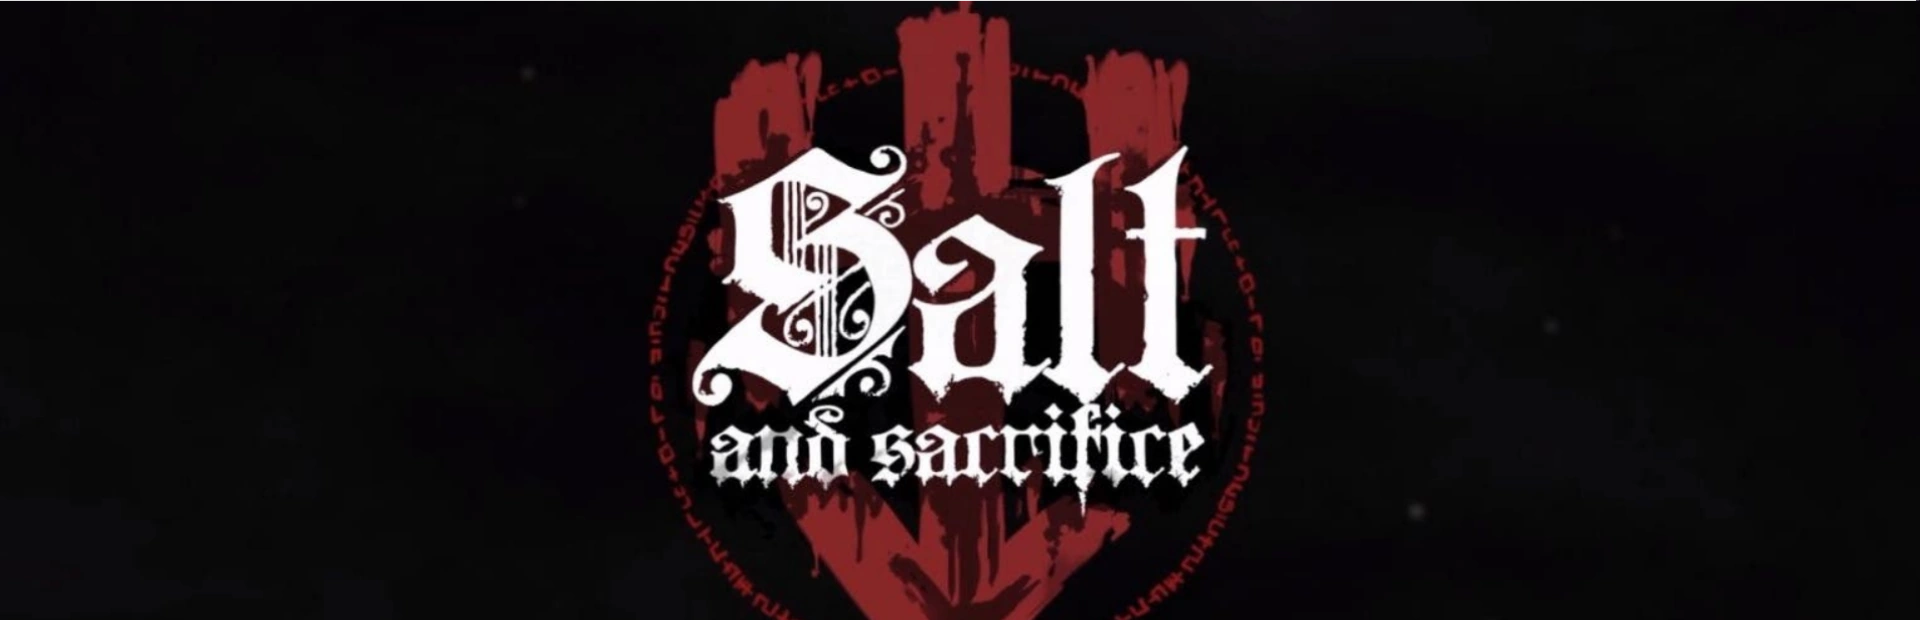 Salt.and .Sacrifice.banner3 1